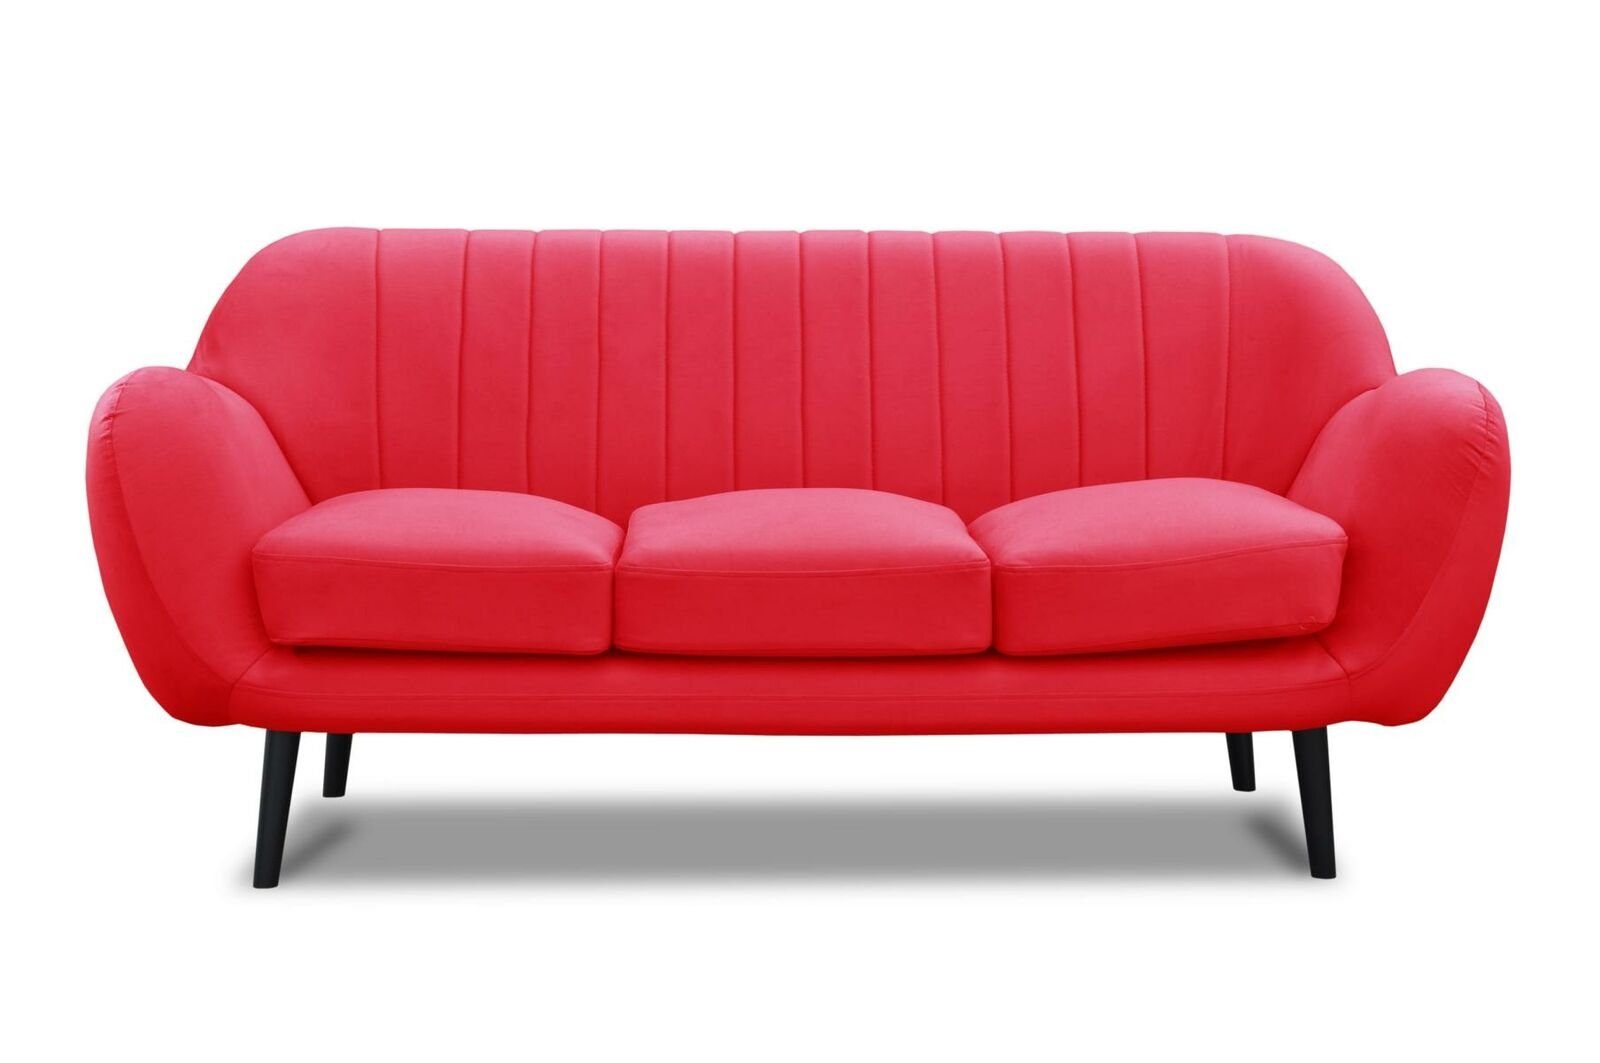 JVmoebel Sofa Designer Rote Sofagarnitur 3+2+1 Sitzer Set Garnitur Polstersofas, Made in Europe